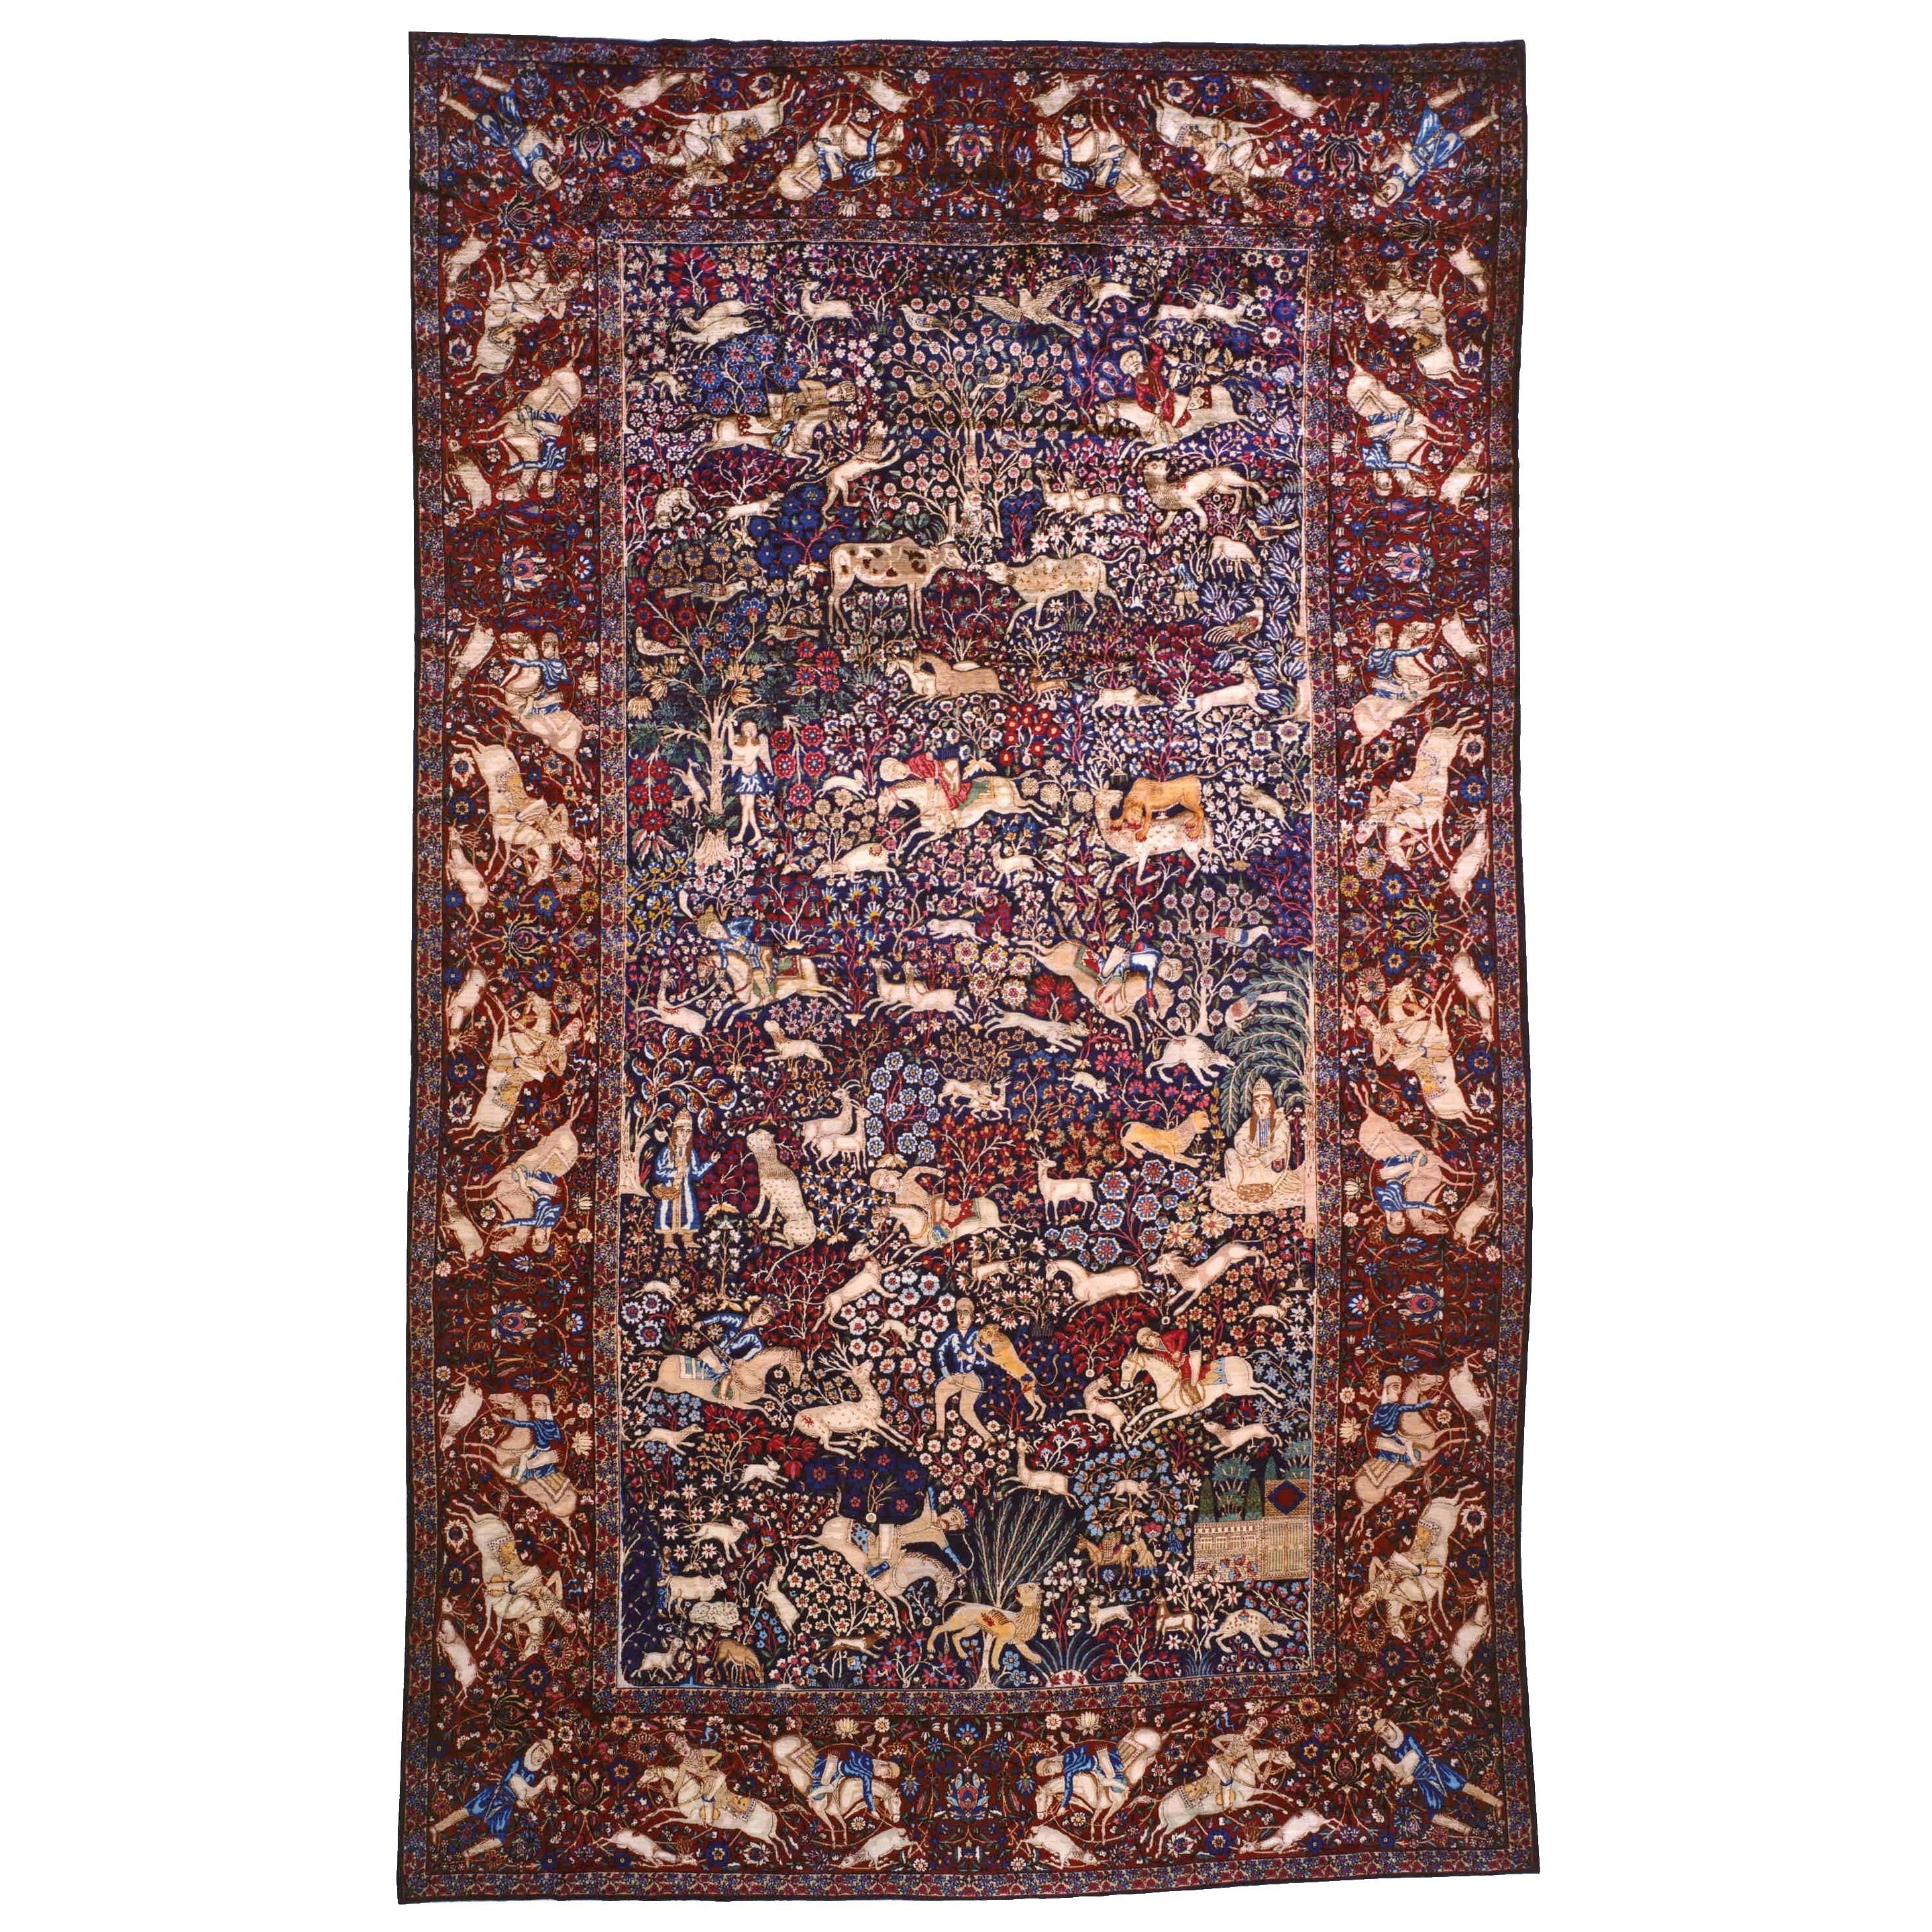 Antique Persian Kerman Hunting Design Oriental Carpet, circa 1890